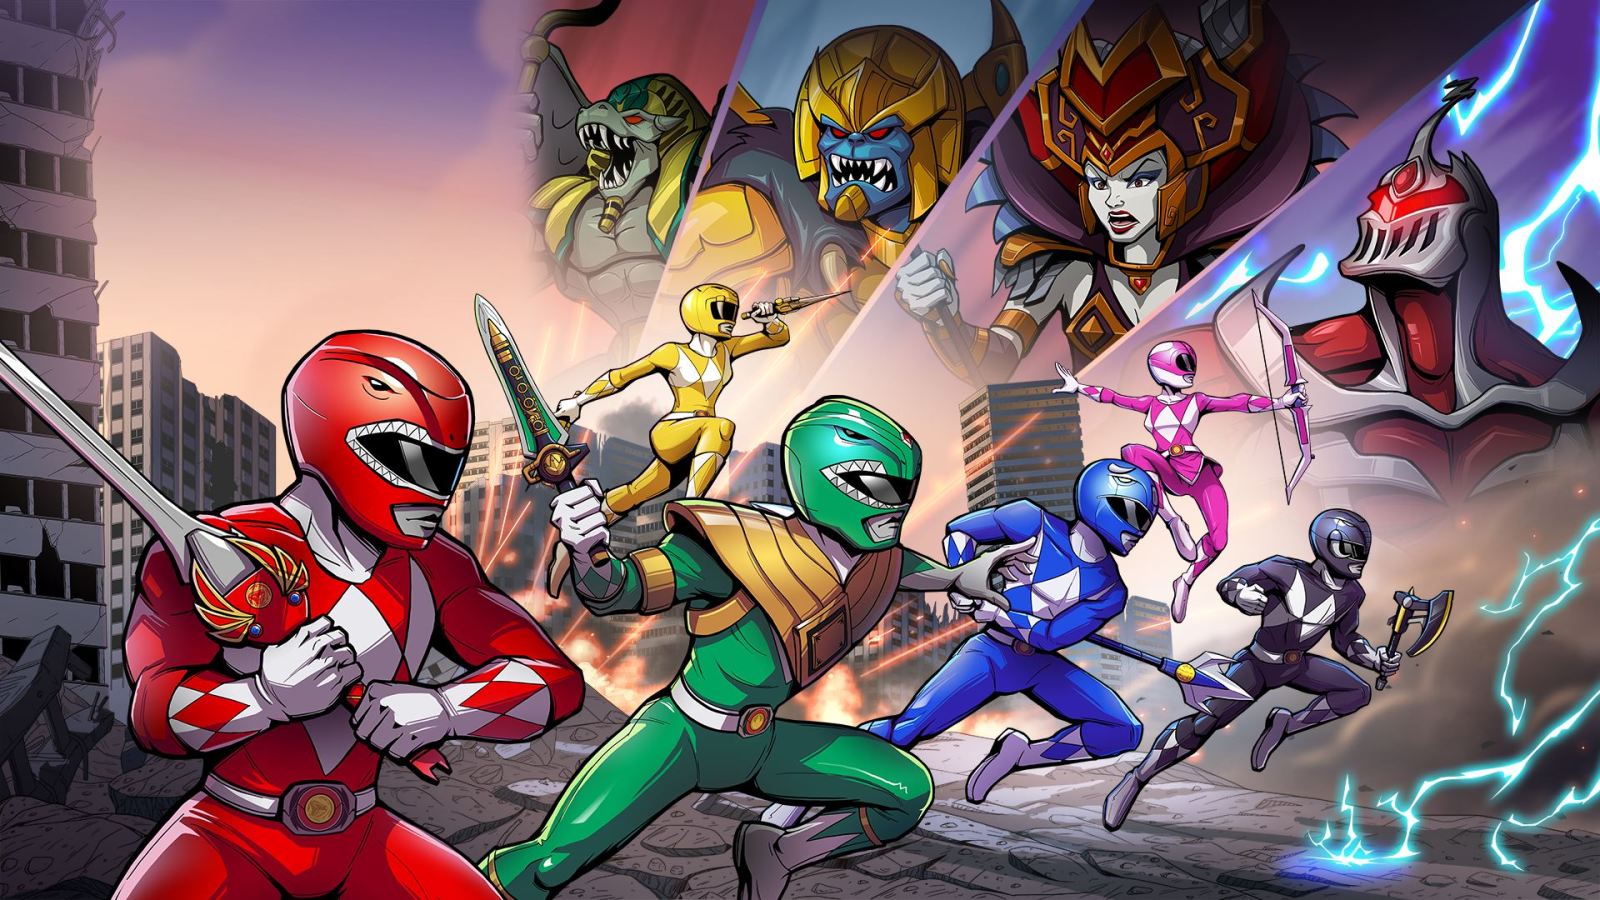 Mighty Morphin Power Rangers: Mega Battle Backgrounds on Wallpapers Vista